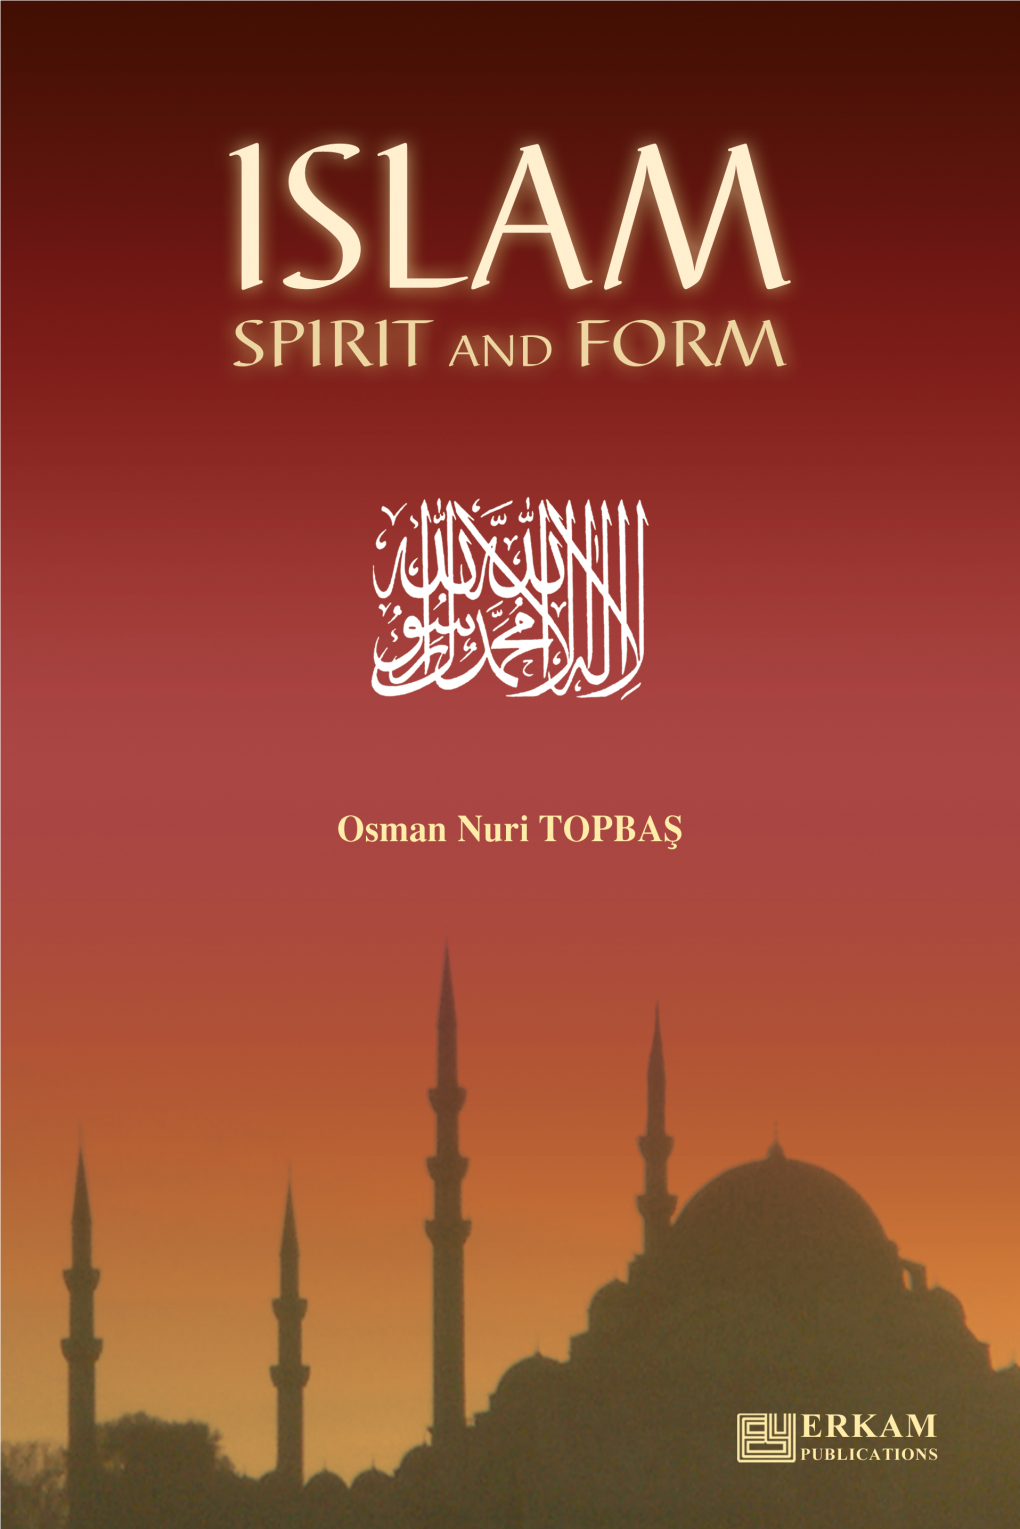 Islam, Spirit and Form